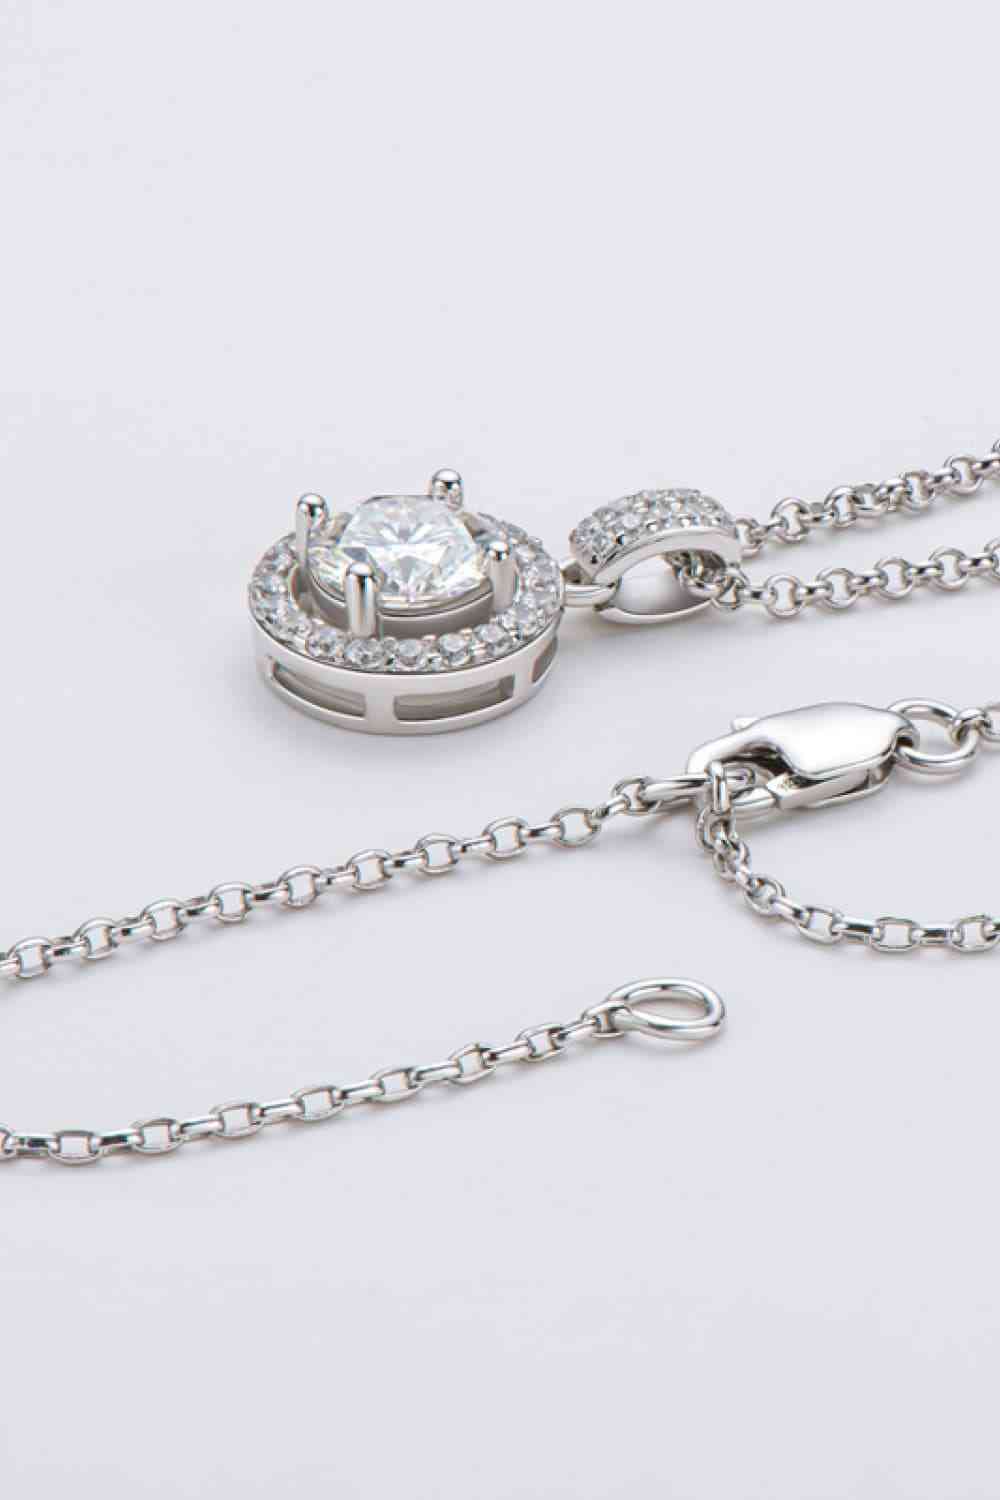 Zircon Pendant 925 Sterling Silver Necklace - Everyday-Sales.com